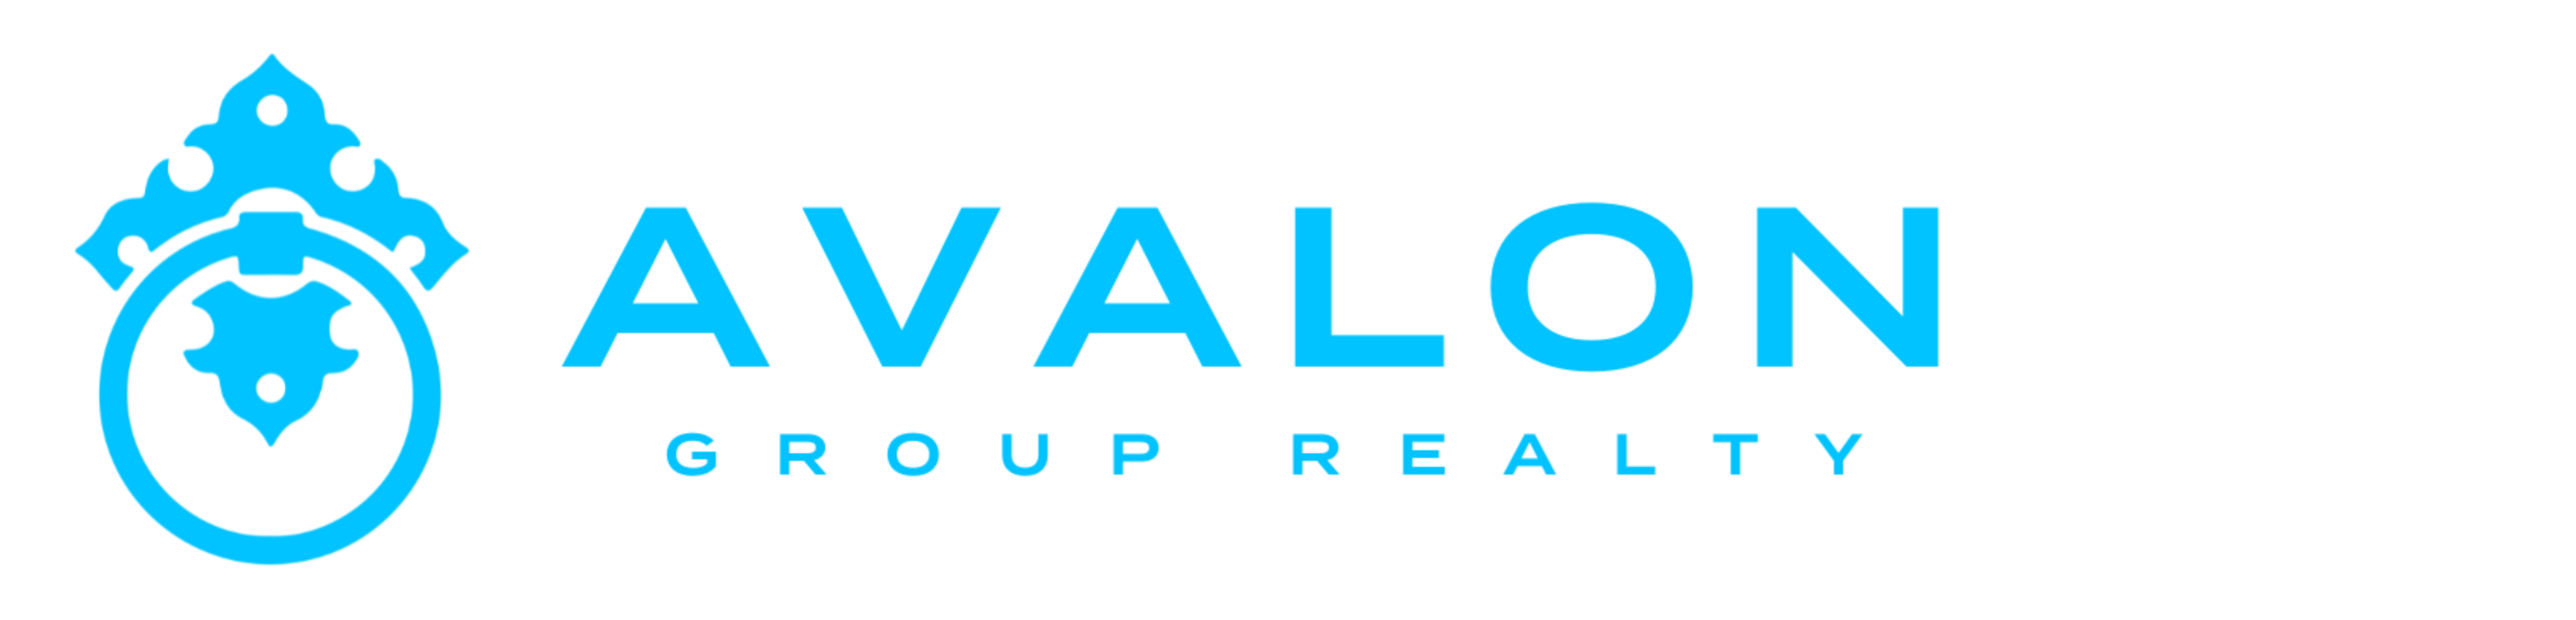 Avalon Group Realty Logo For Website-3